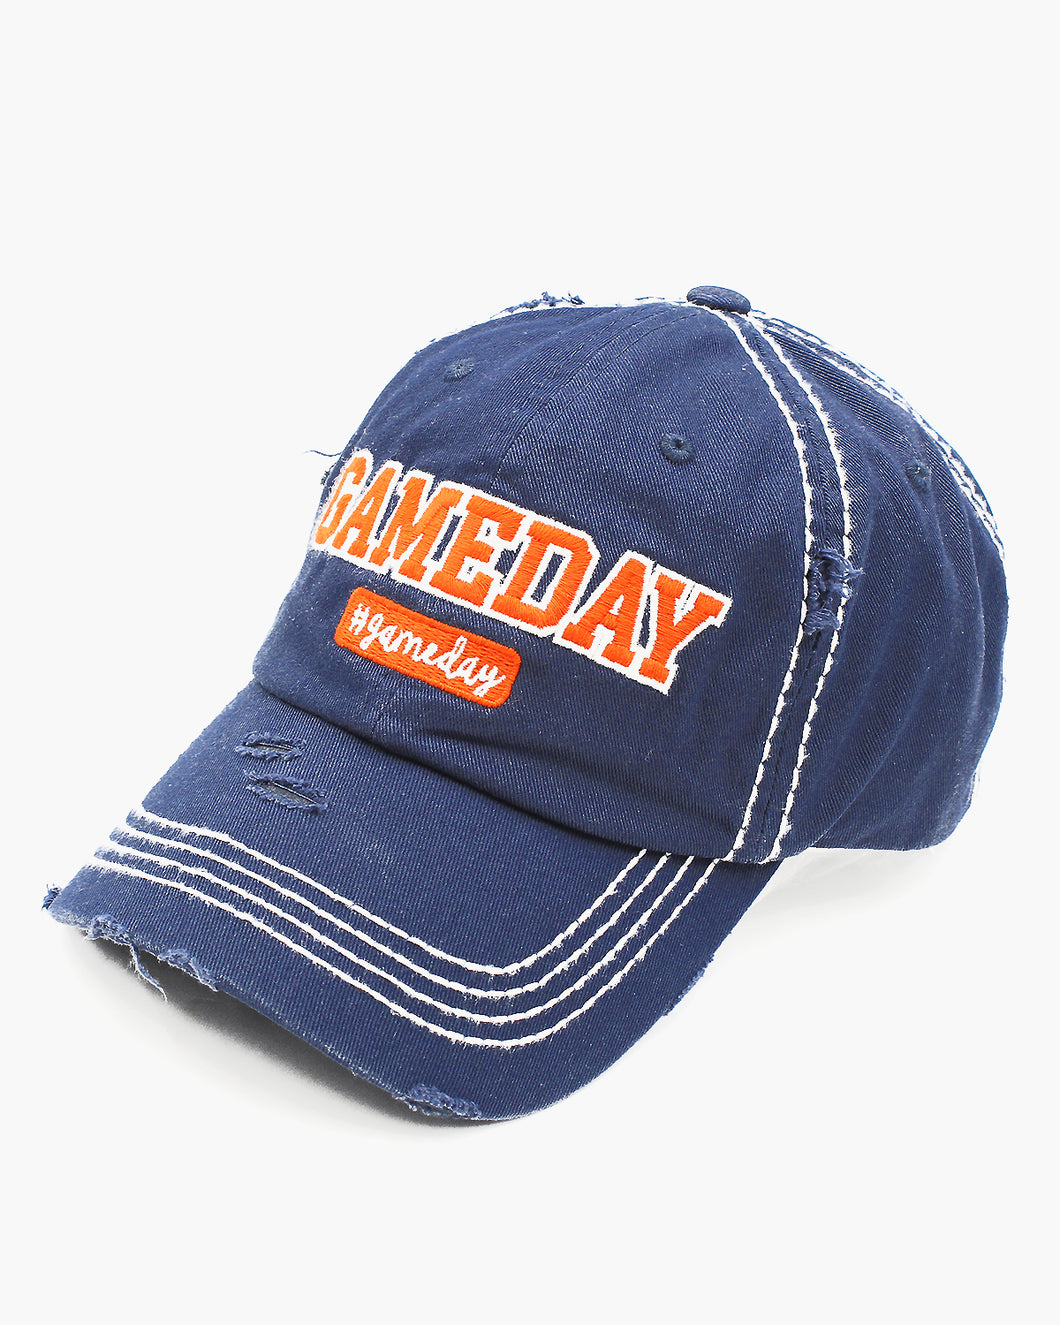 'GAME DAY' Vintage Ball Cap